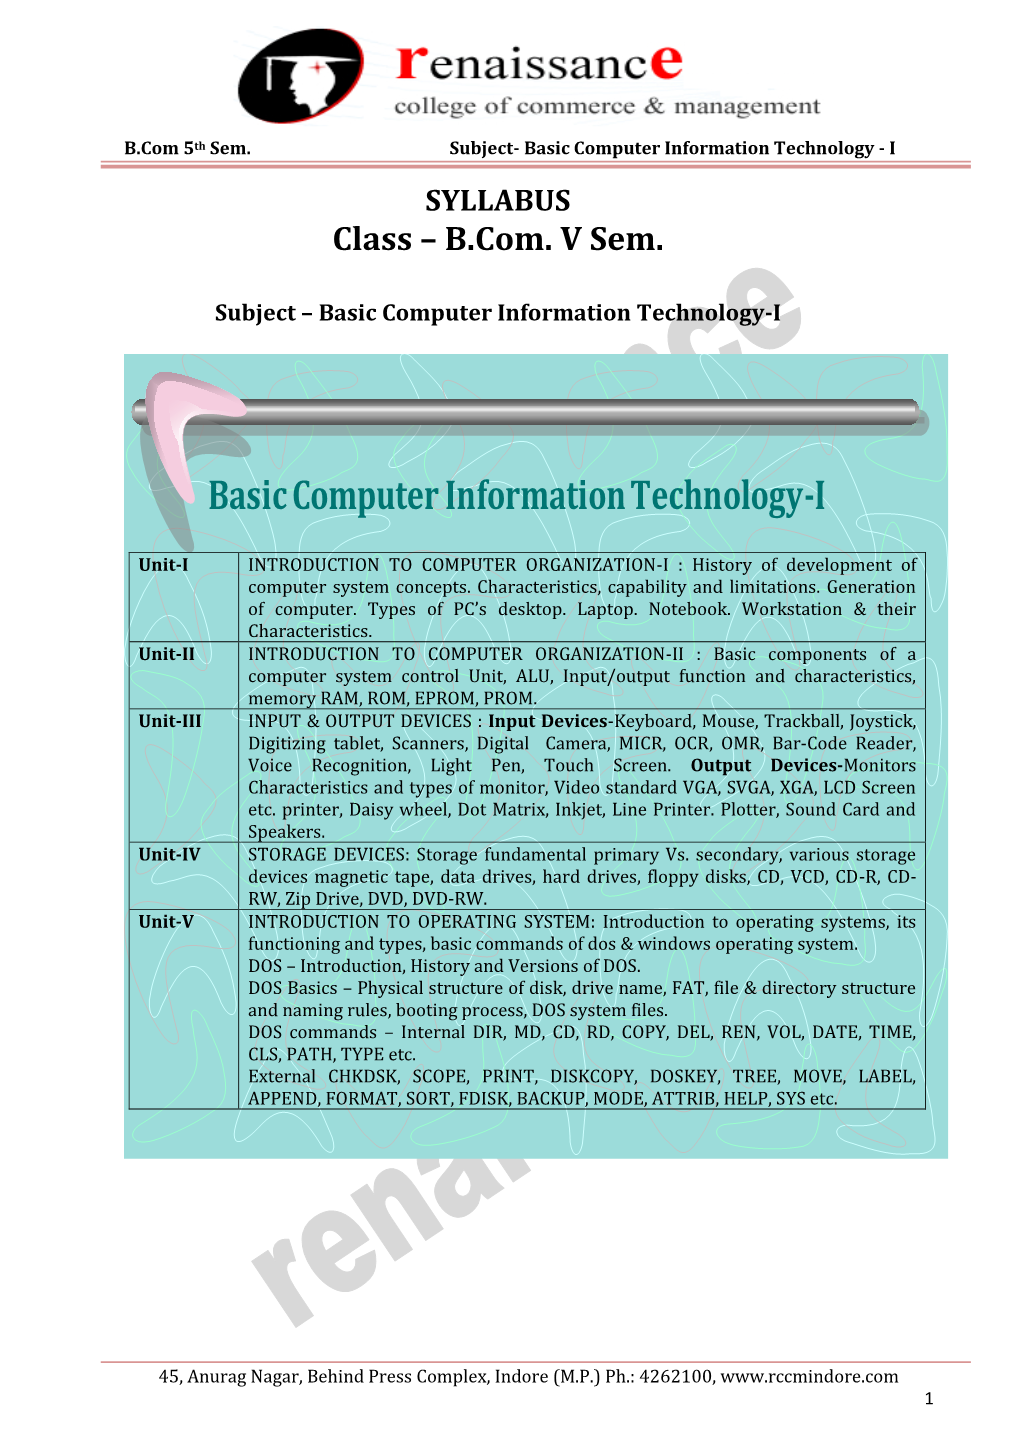 Basic Computer Information Technology-I